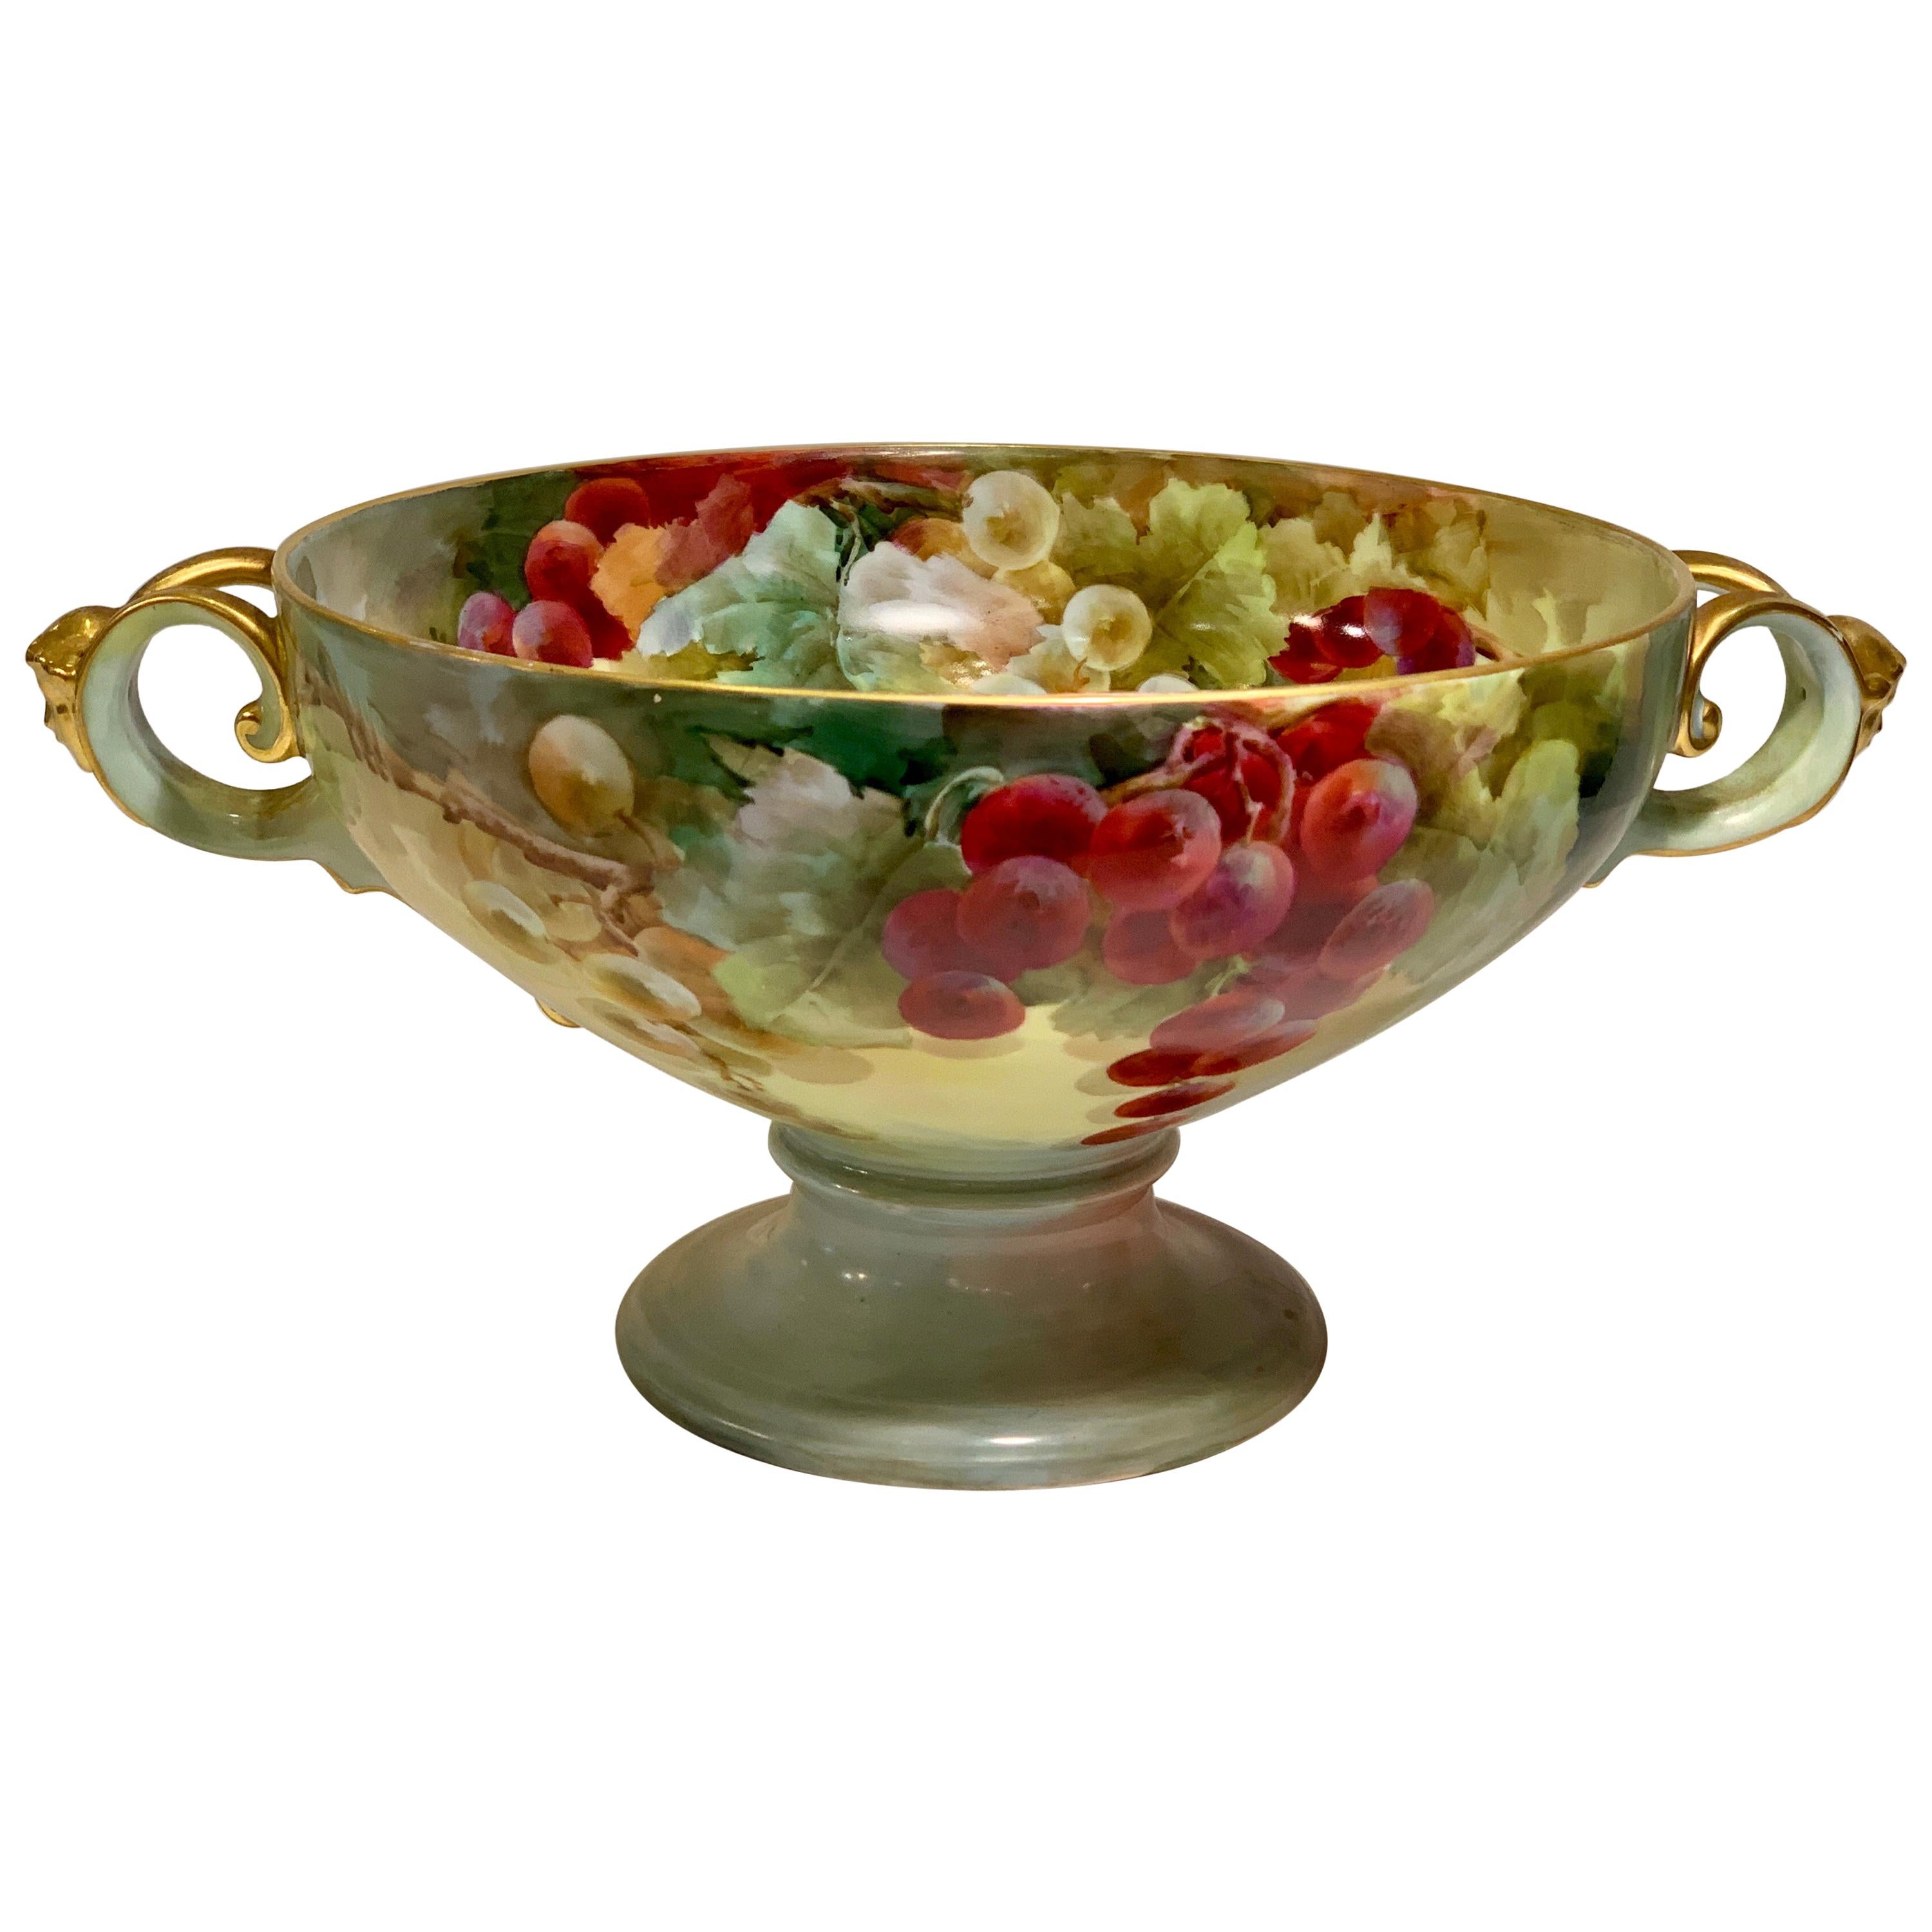 Masterpiece Antique Art Nouveau Rosenthal Hand Painted Porcelain Footed Bowl